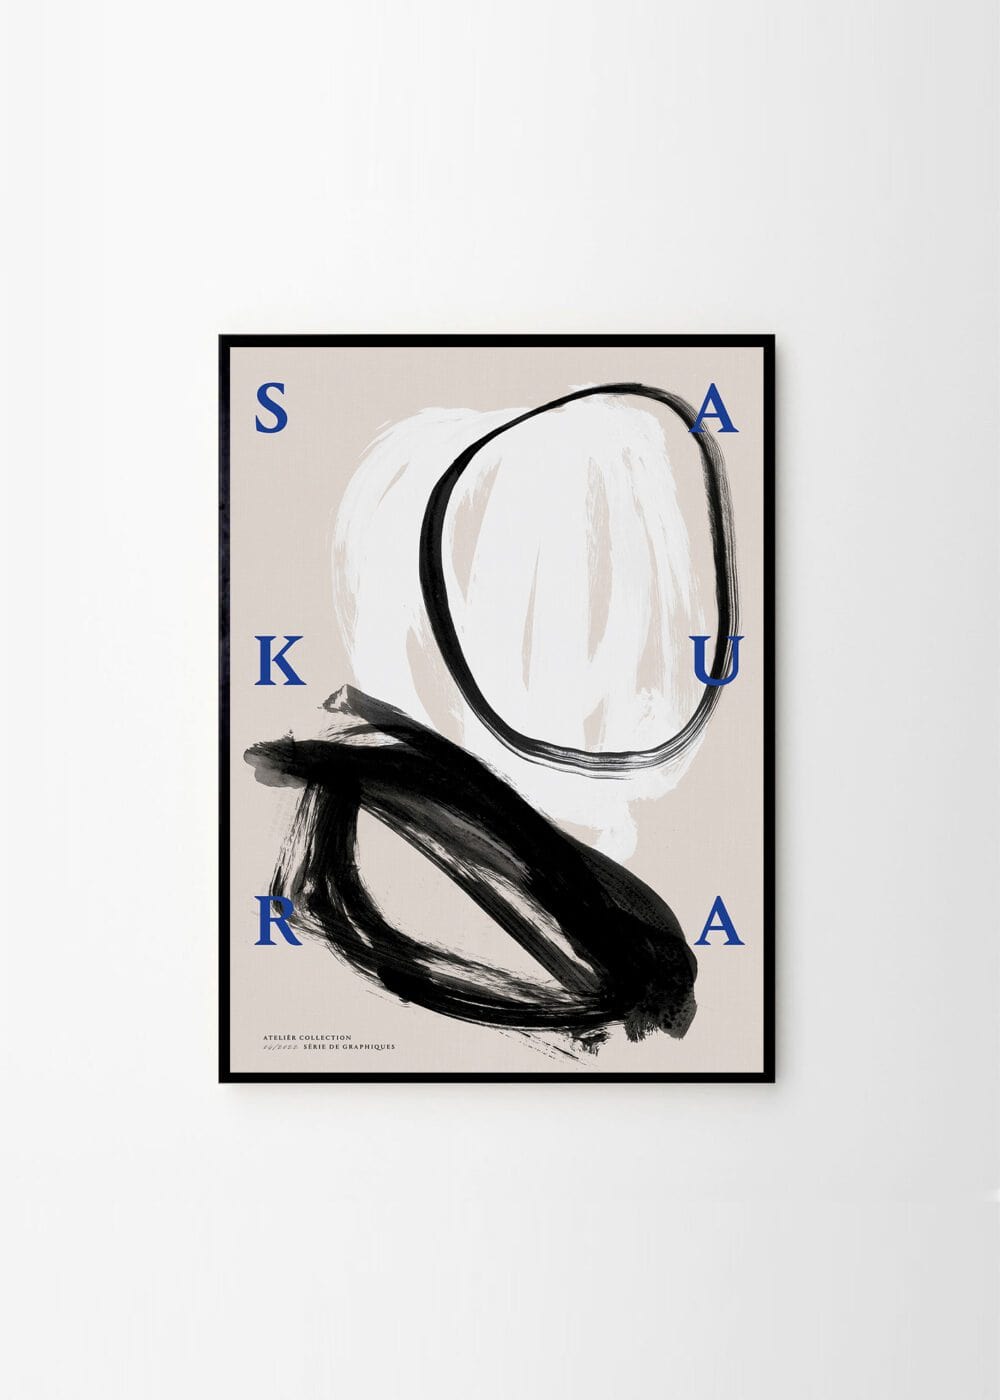 THE POSTER CLUB Poster Πόστερ, Sakura, Julia Hallström Hjort, (50x70)cm, Μπλέ/Μάυρο/Εκρού, Sustainable Paper, THE POSTER CLUB